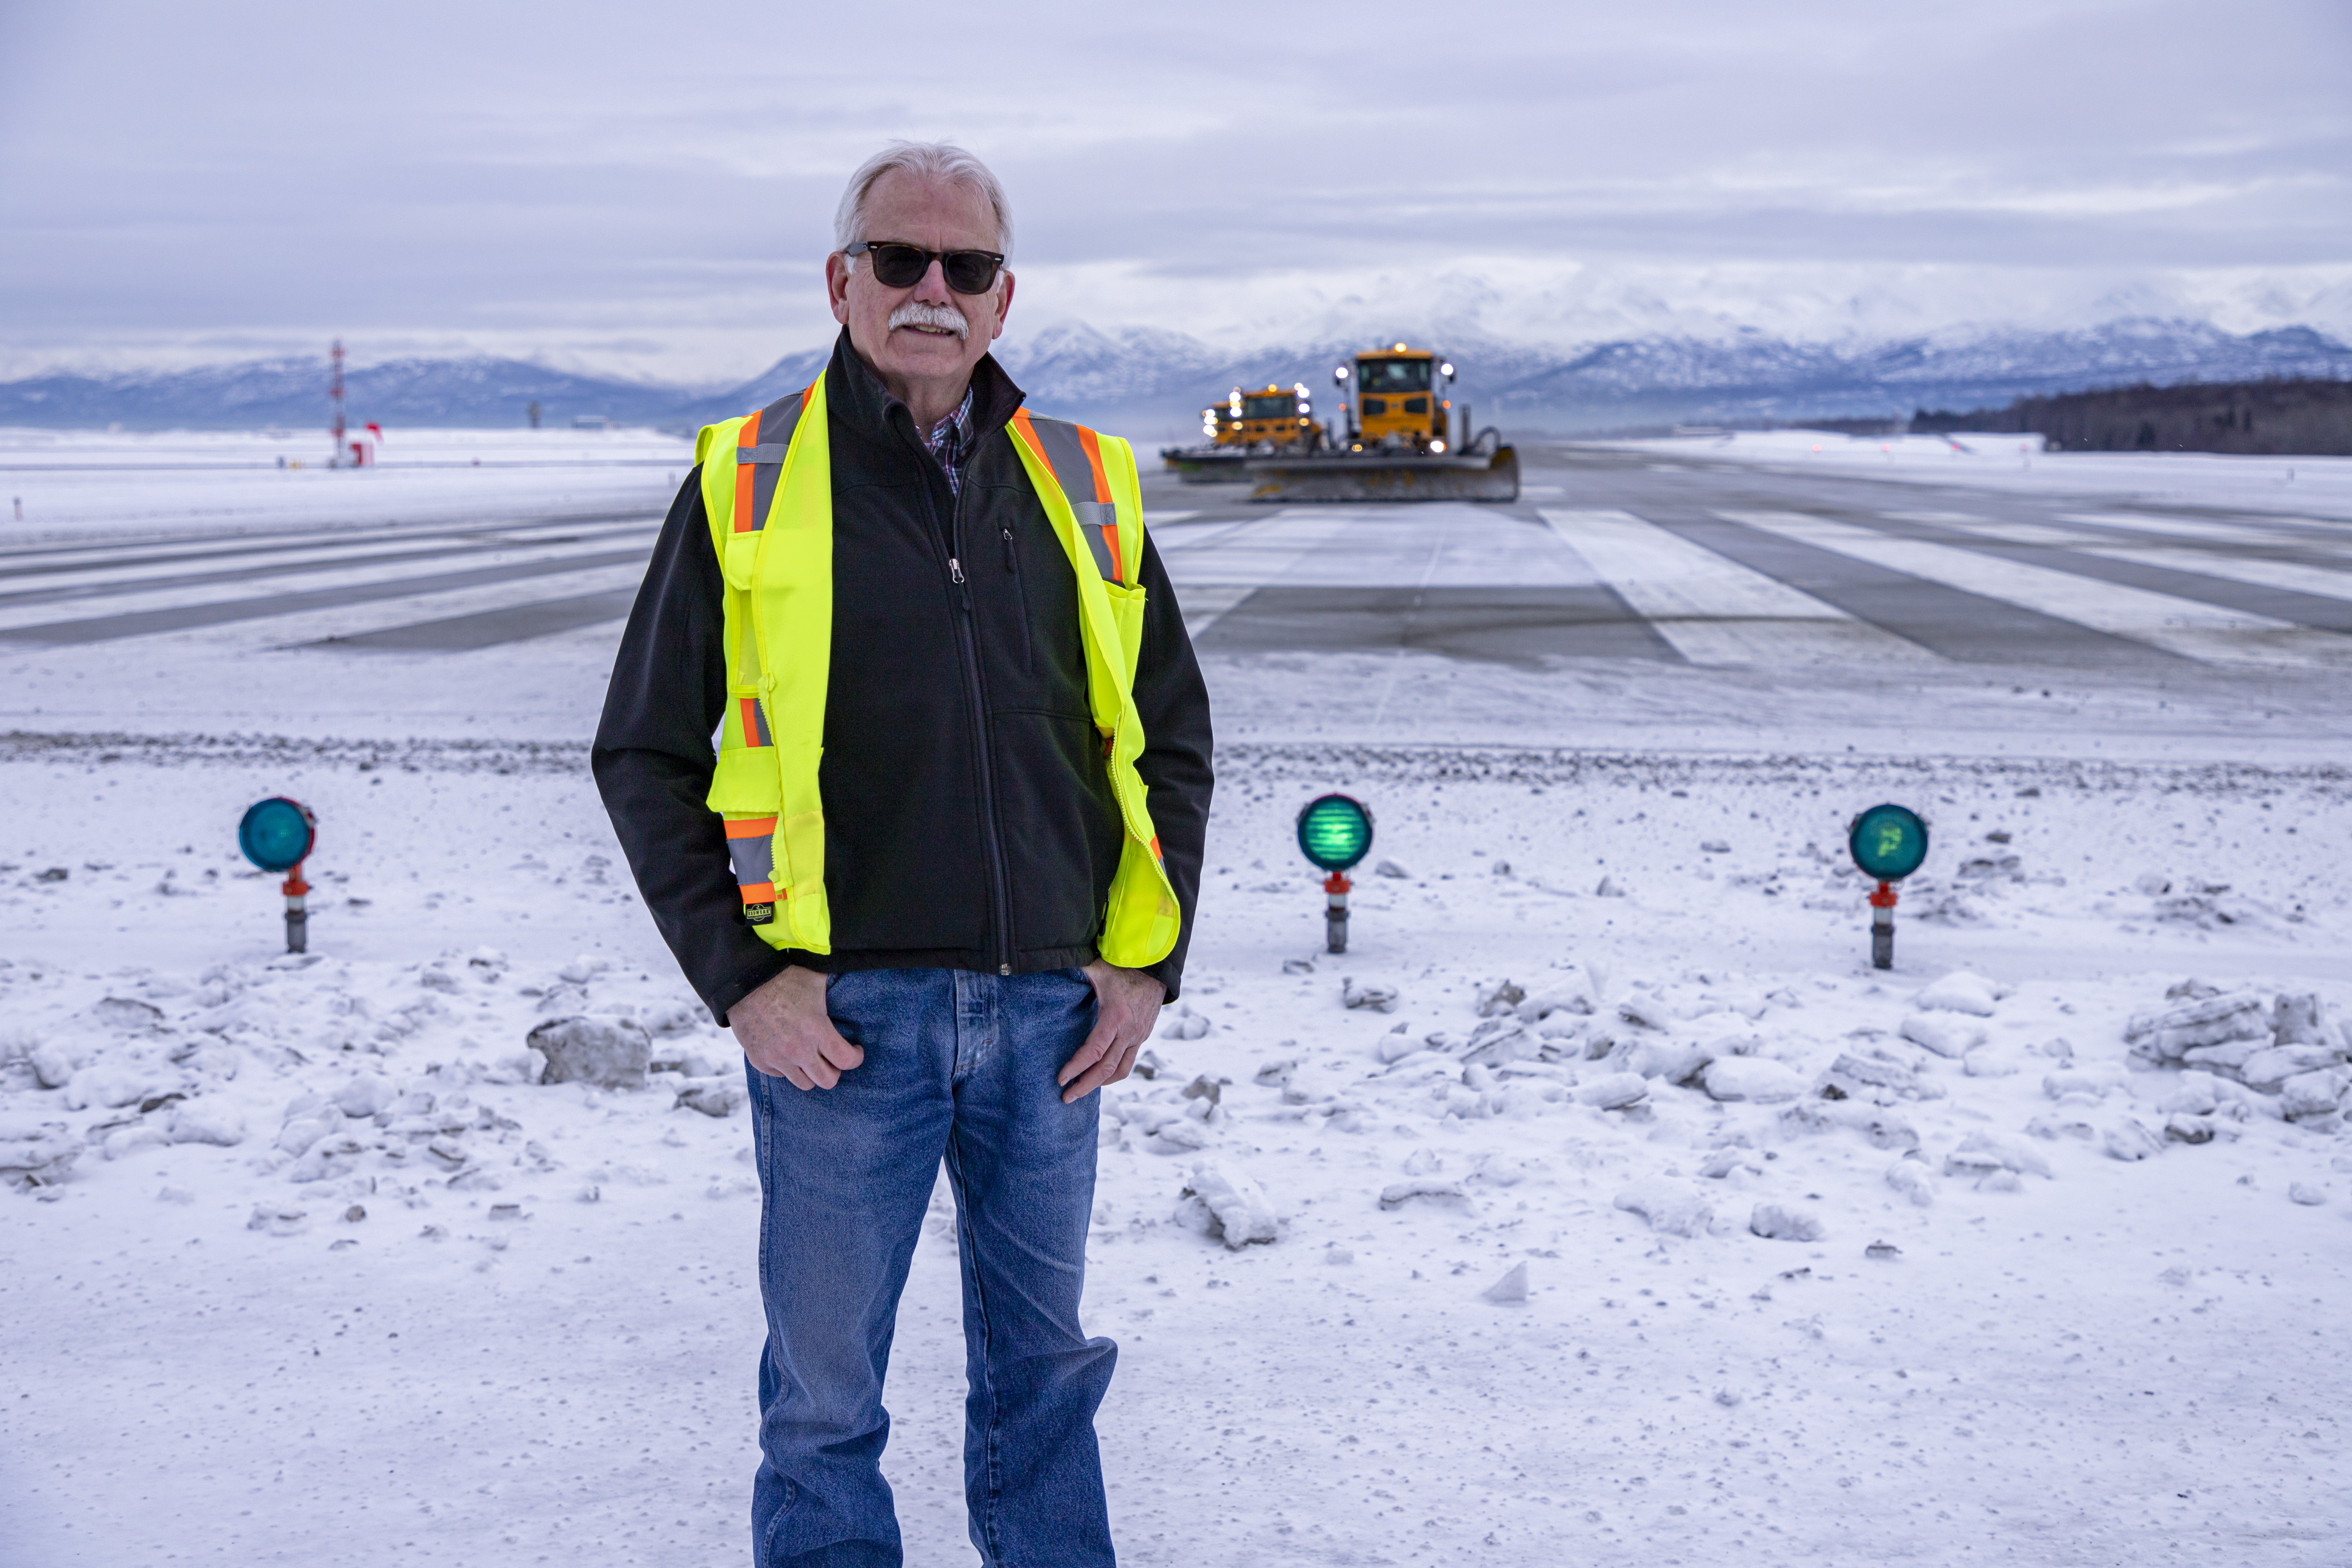 Ice Airport Alaska Season 4 Episode 2